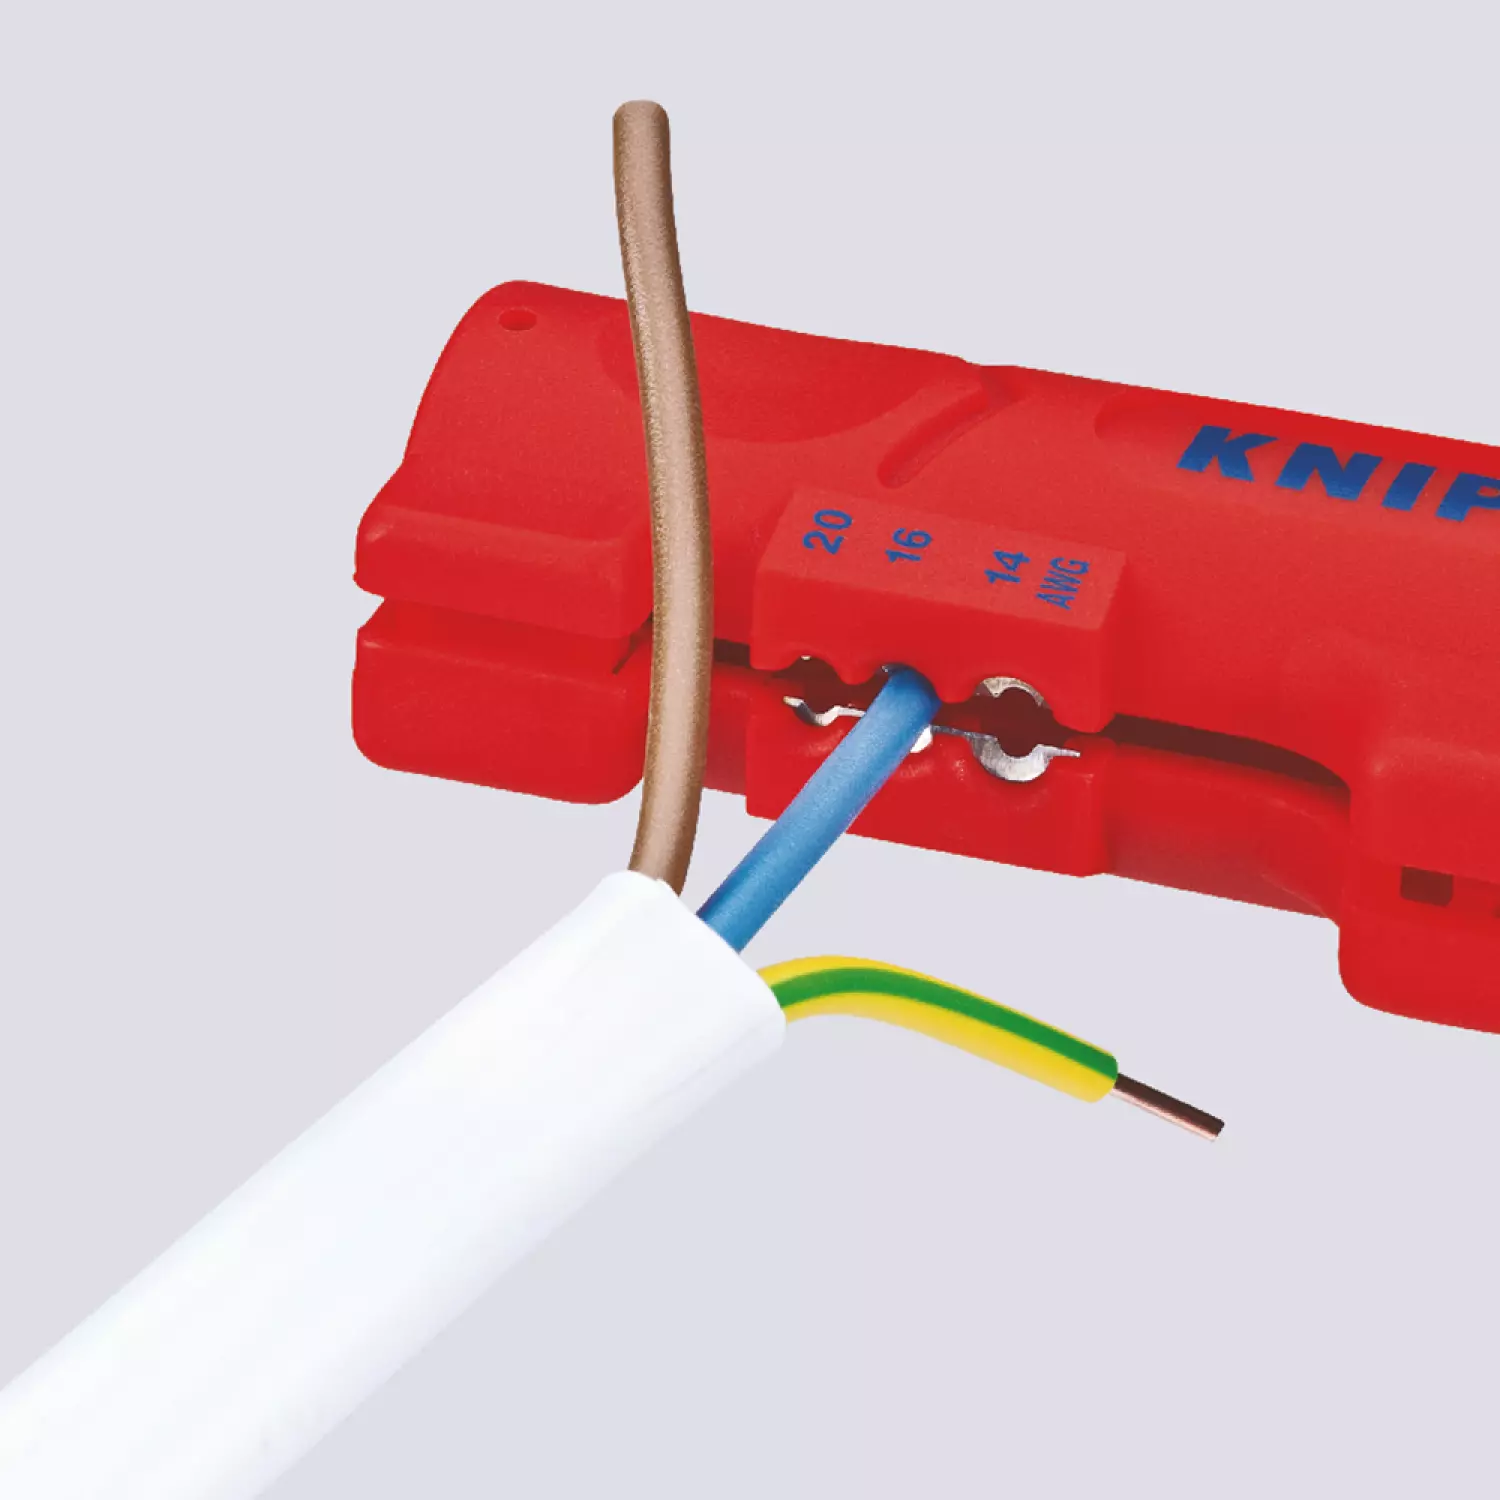 Knipex 16 64 125 SB Ontmantelingsgereedschap voor vlakke en ronde kabels - 125 mm-image